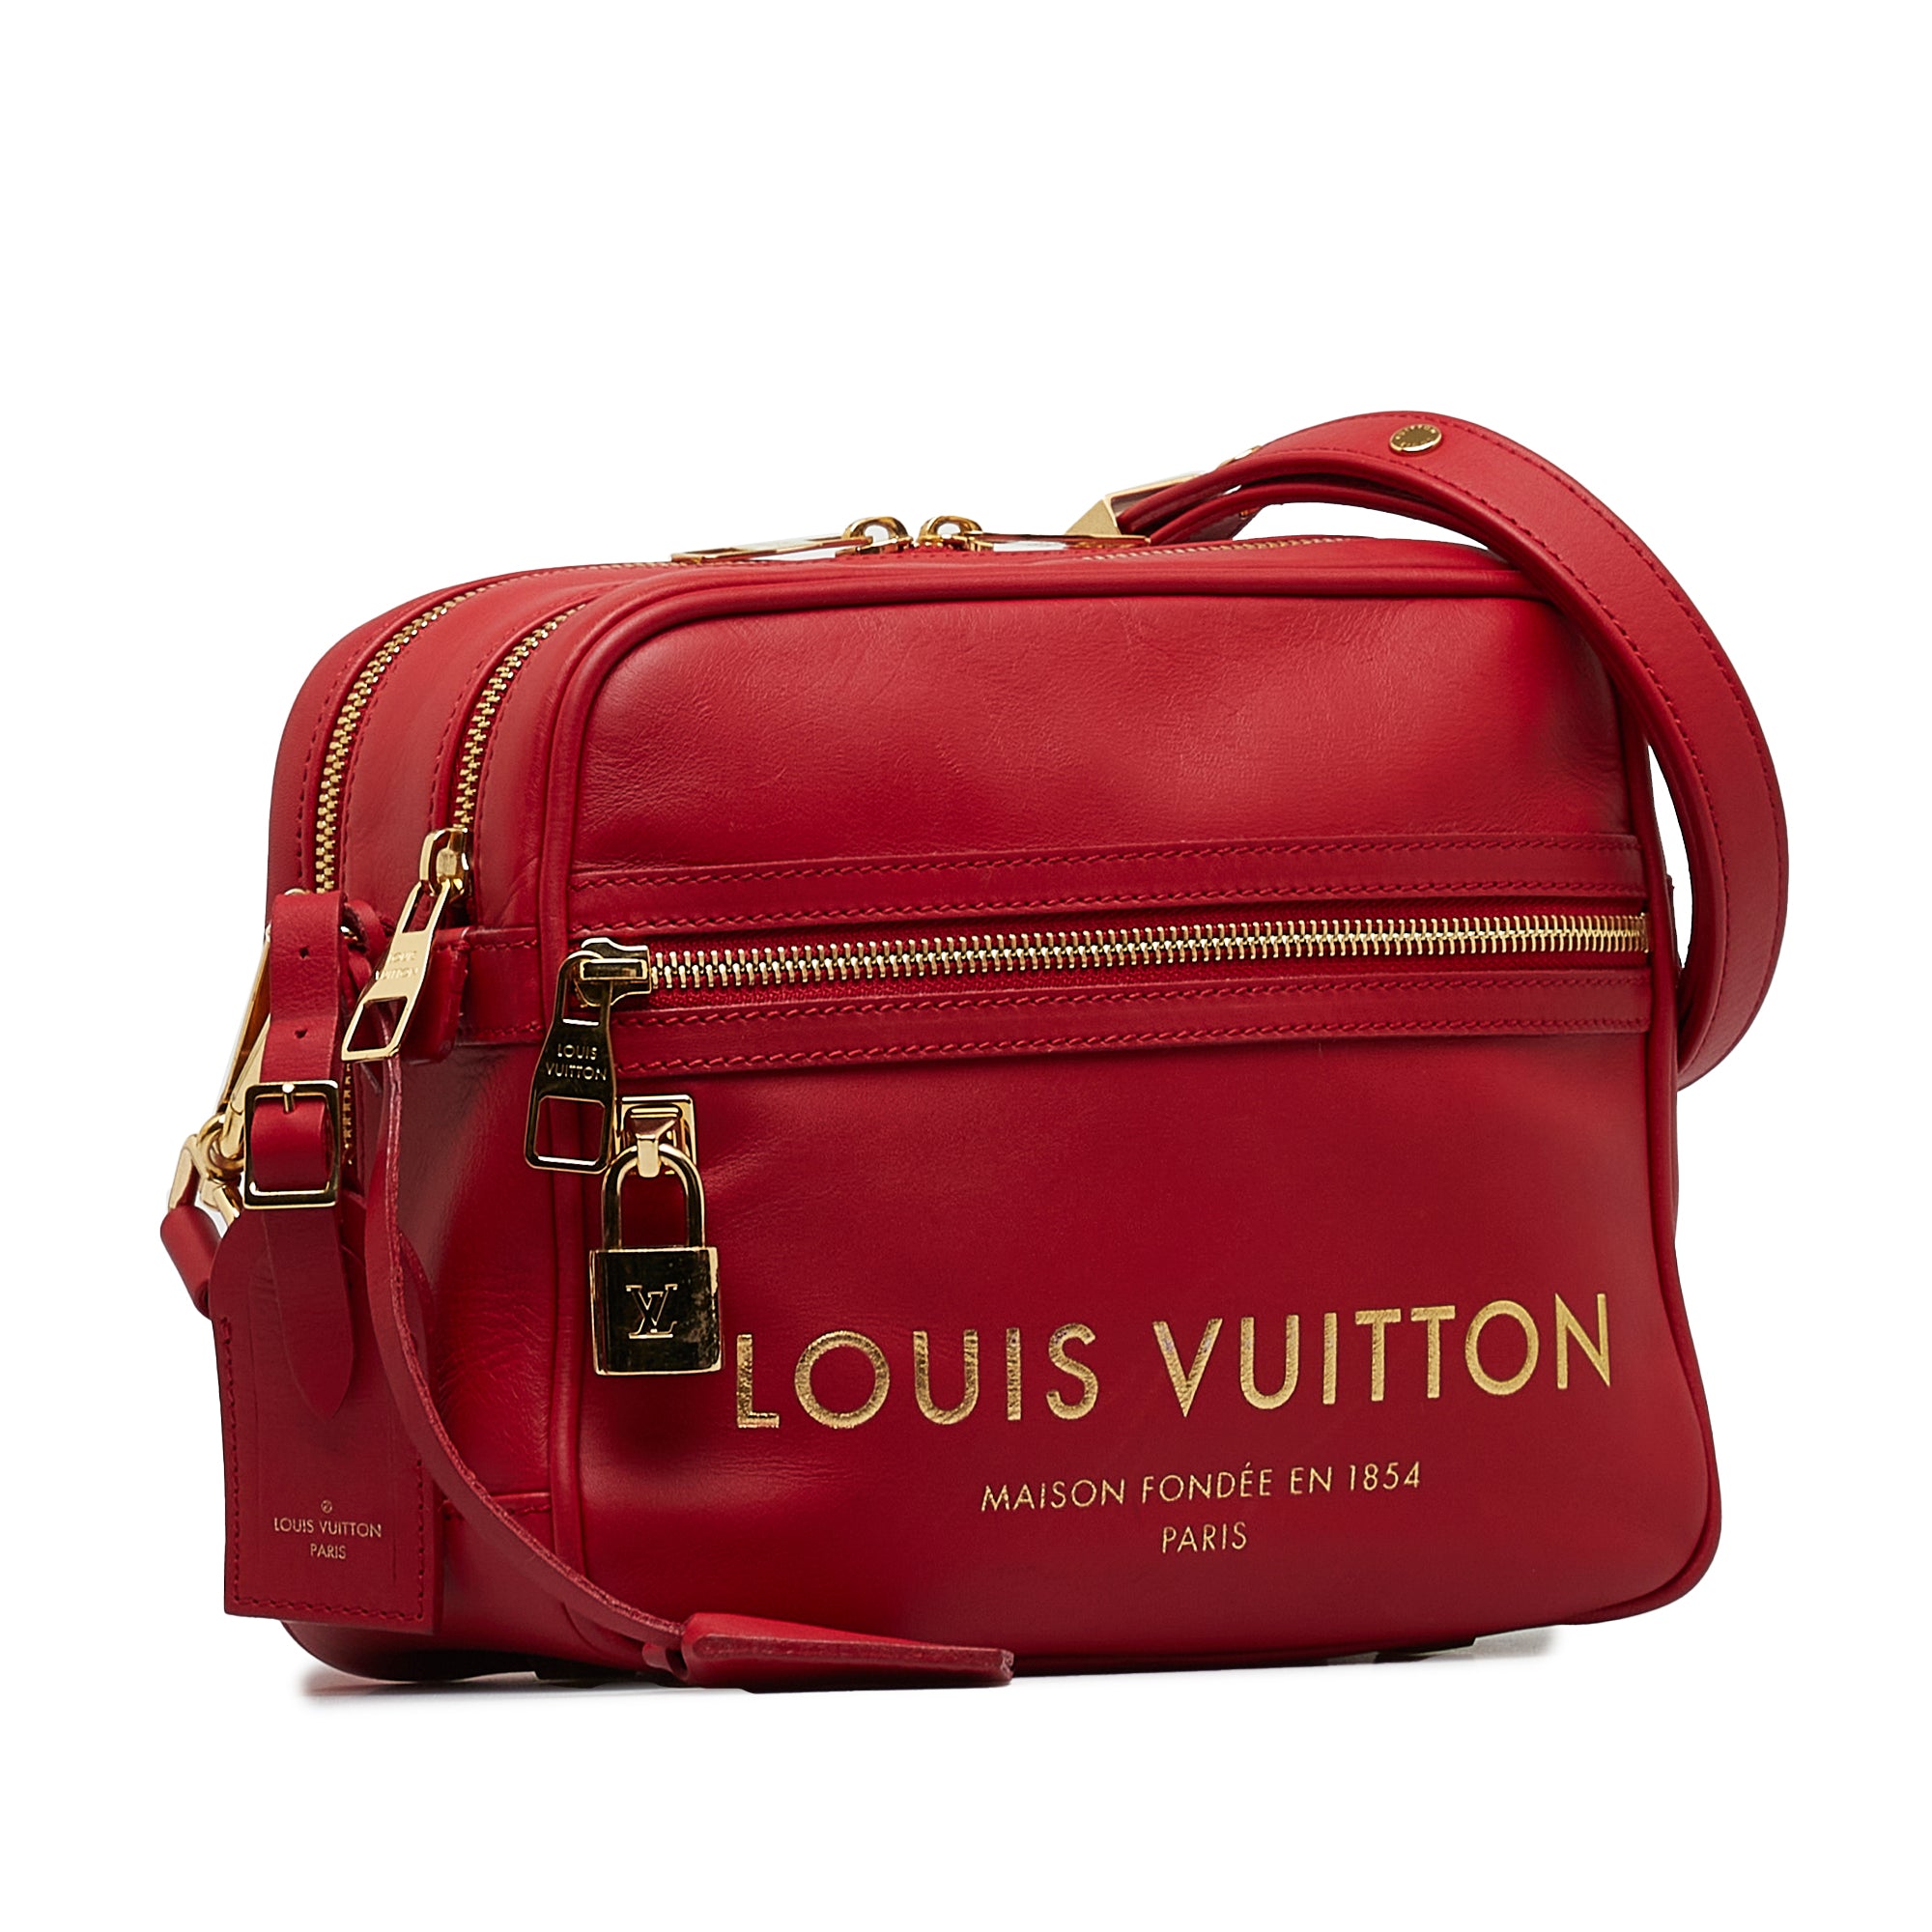 Original Louis Vuitton Maison Fondee en 1854 Sling Bag